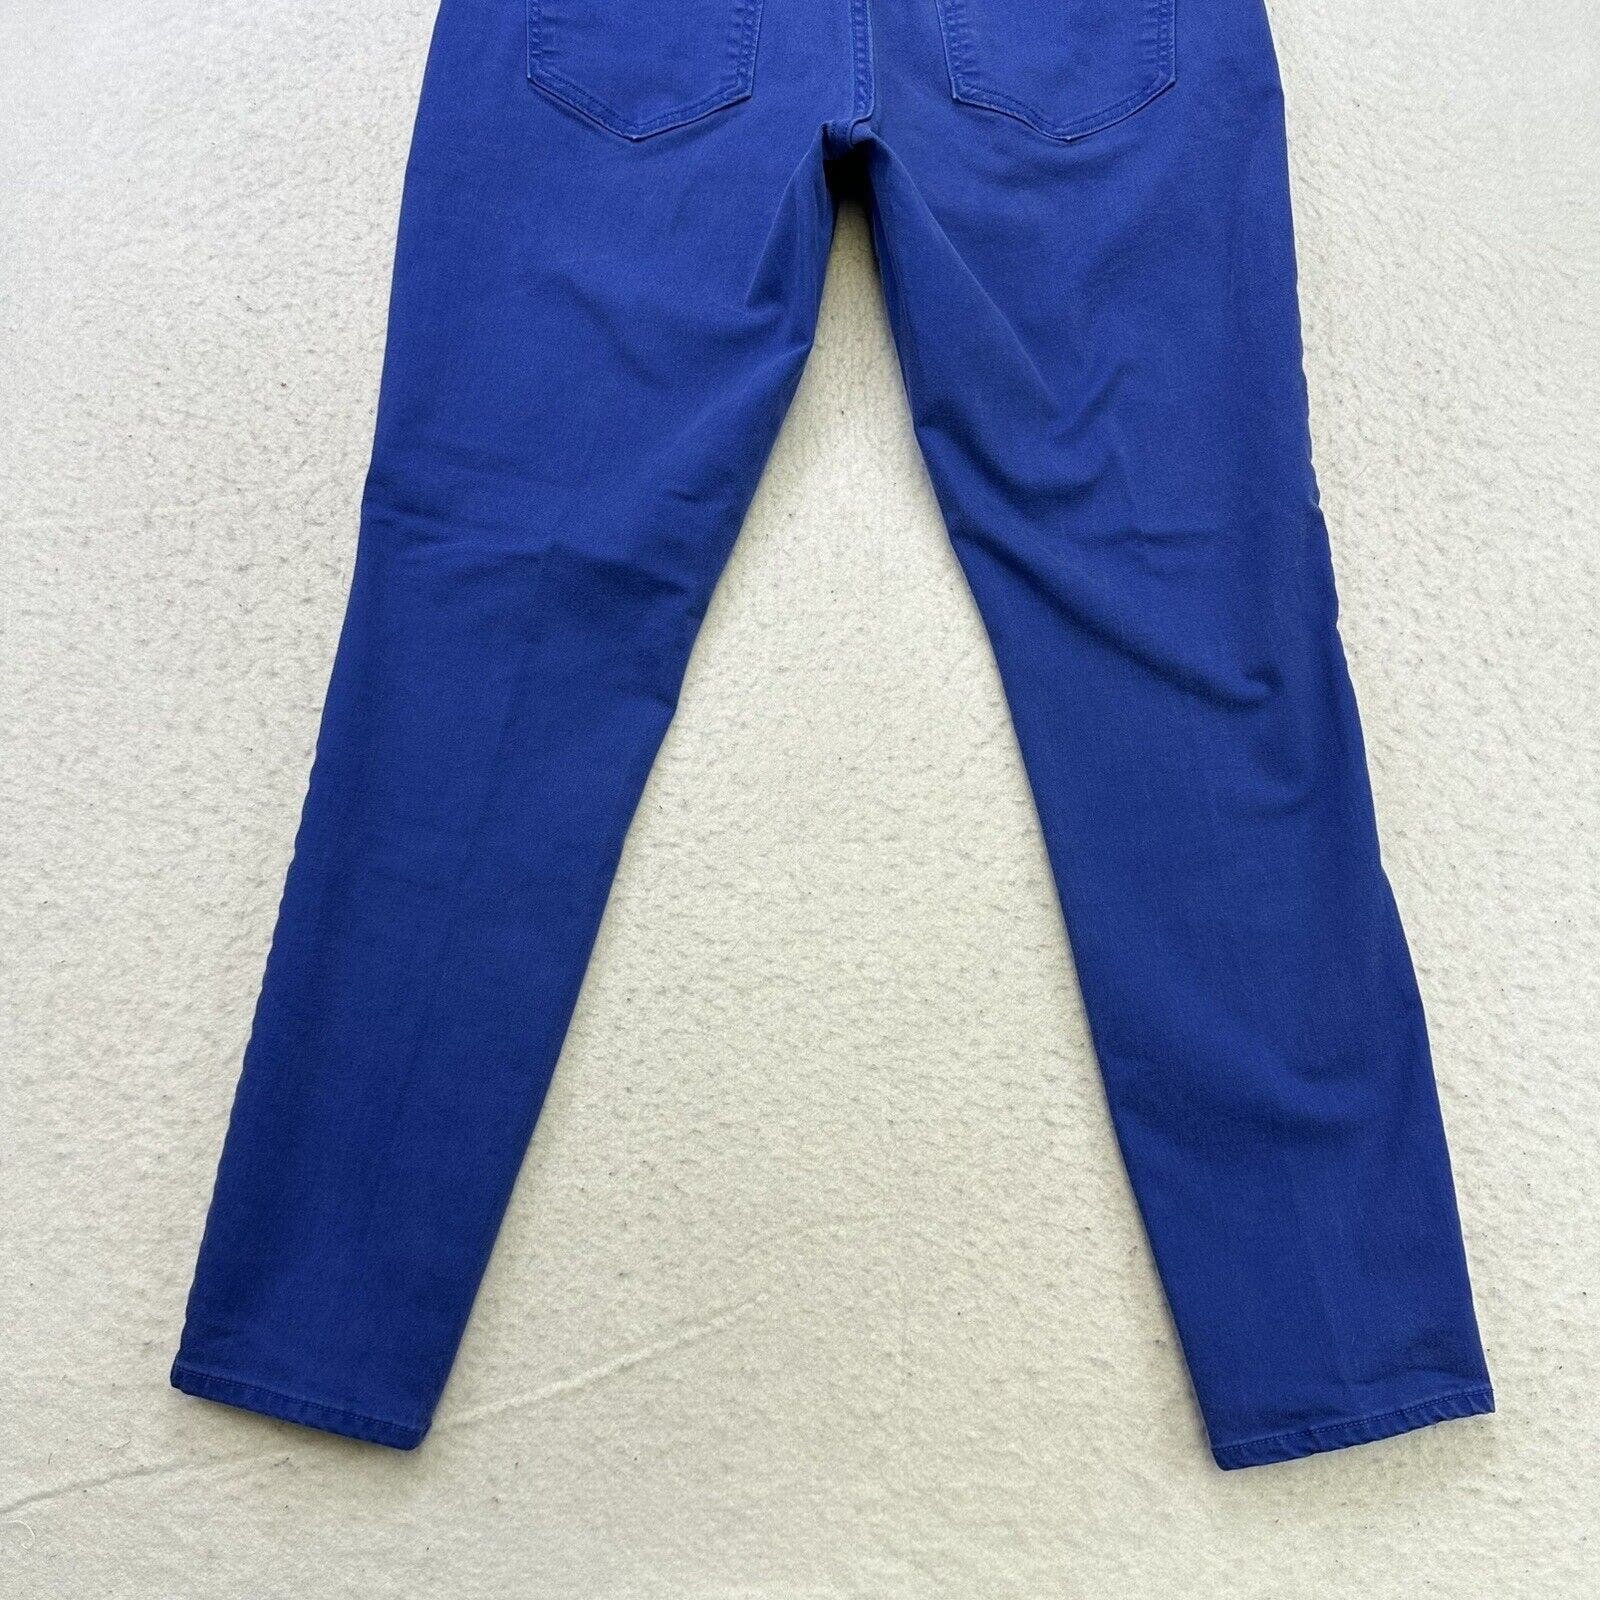 Old Navy Jeans Womens 14 Blue Denim Rockstar Skinny Low Rise Stretch DvrgWvISa